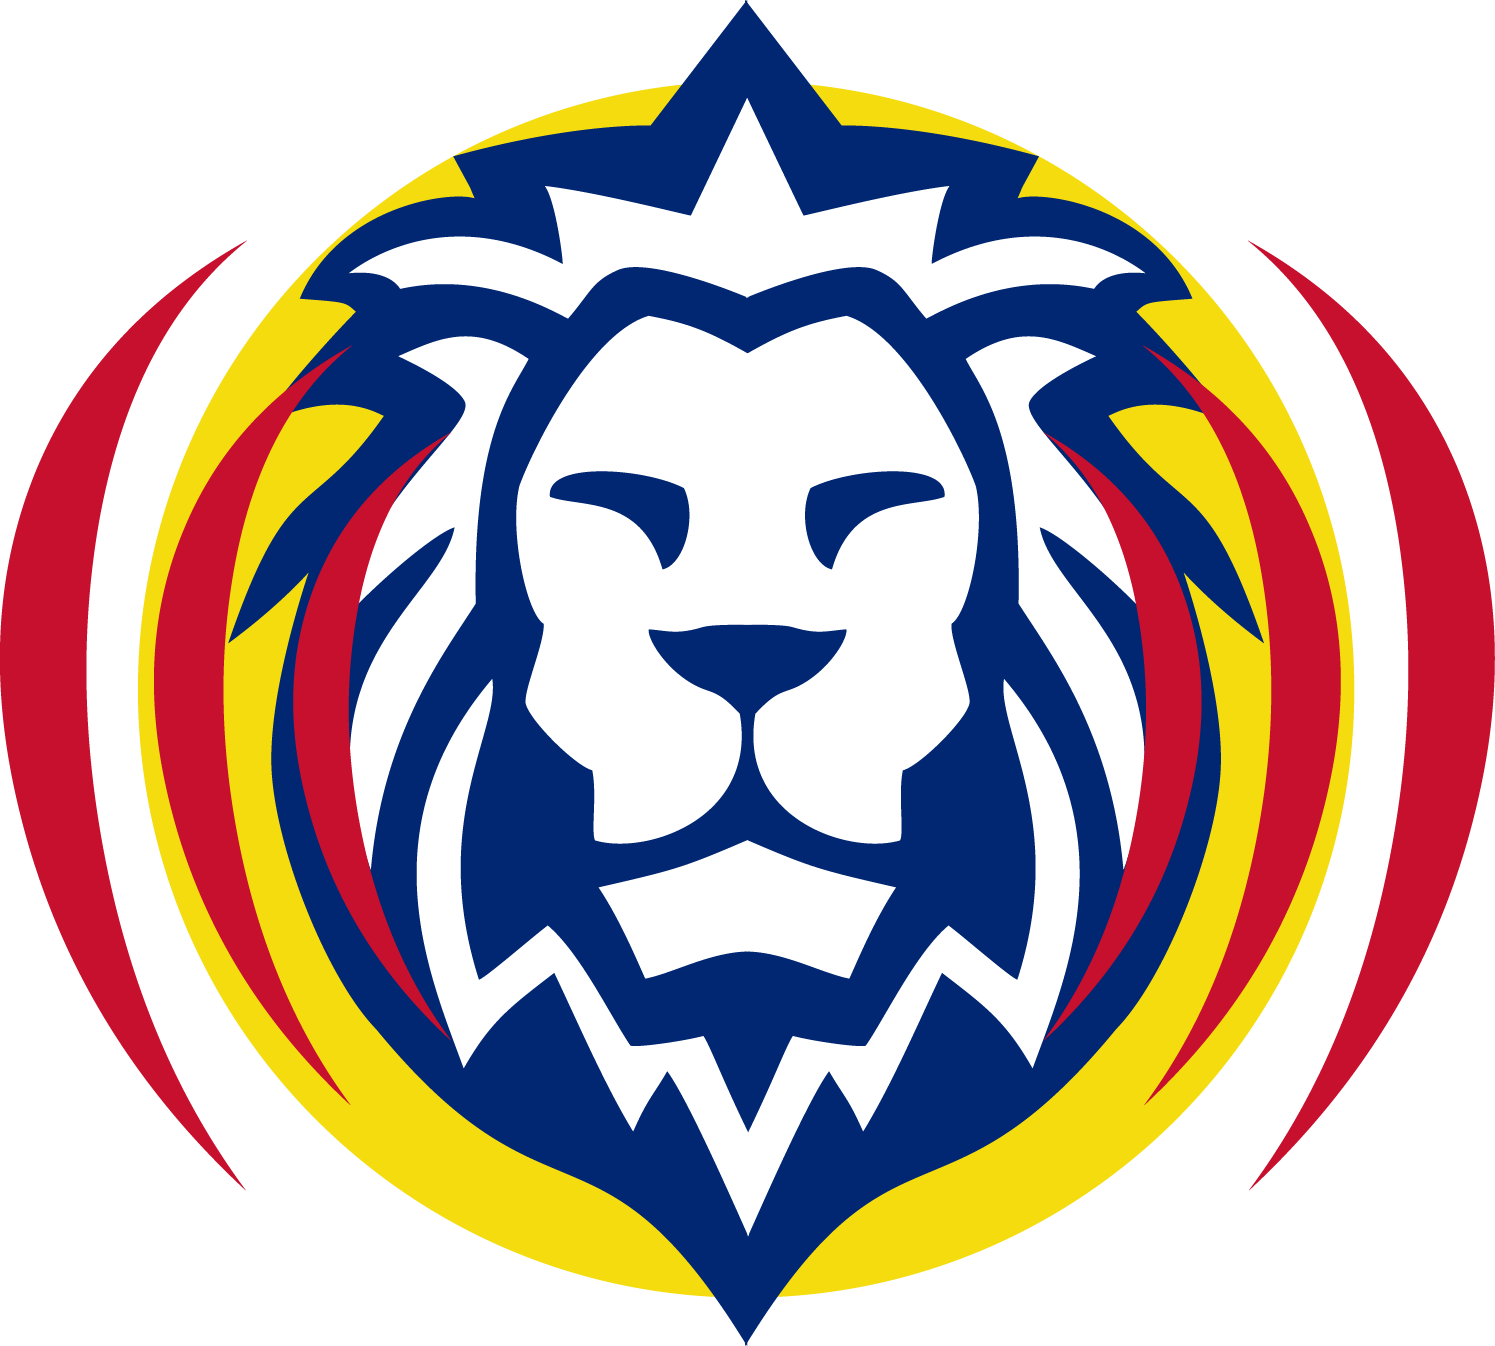 Lyric Lion logo